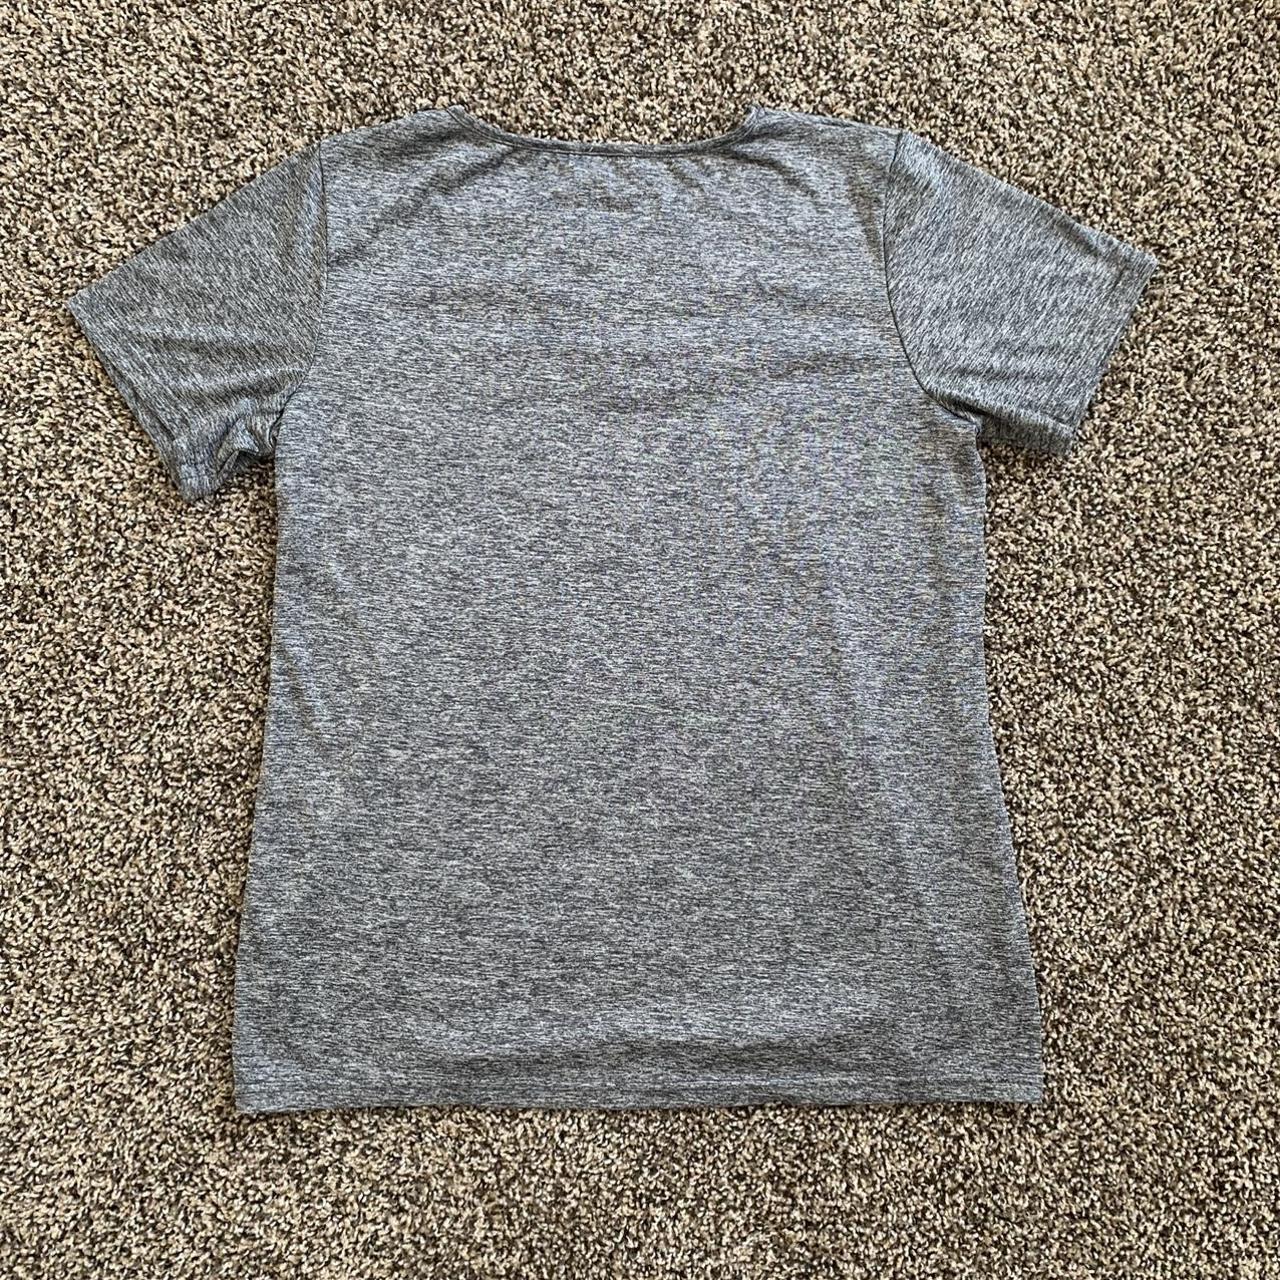 Cherie Amie Women's Grey and Black T-shirt (6)